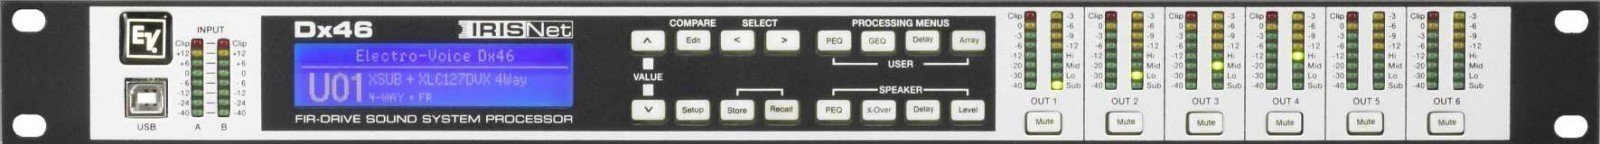 Signalprocessor Electro Voice DX 46